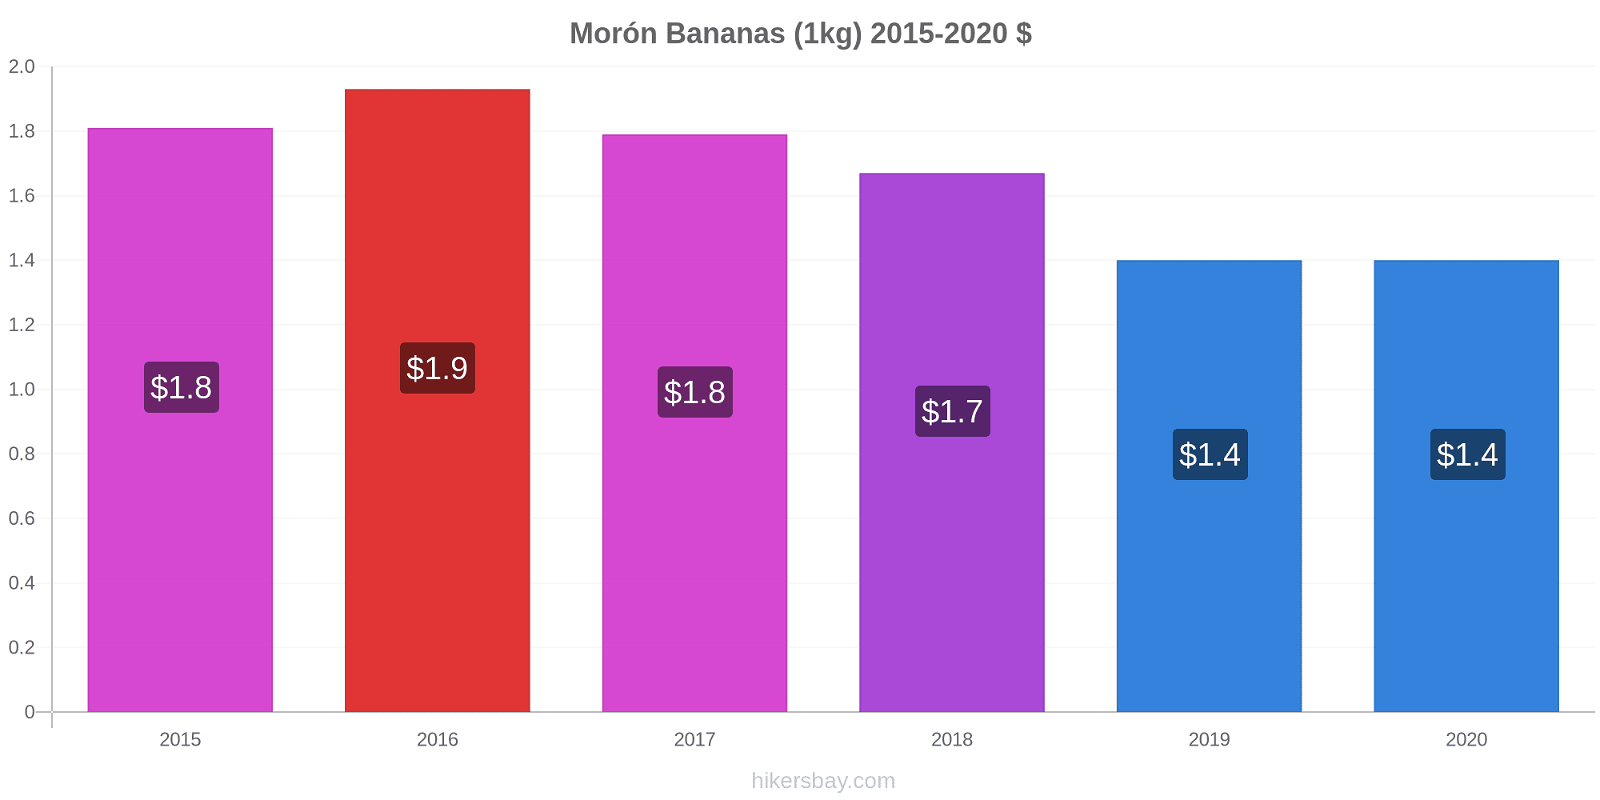 Morón price changes Bananas (1kg) hikersbay.com